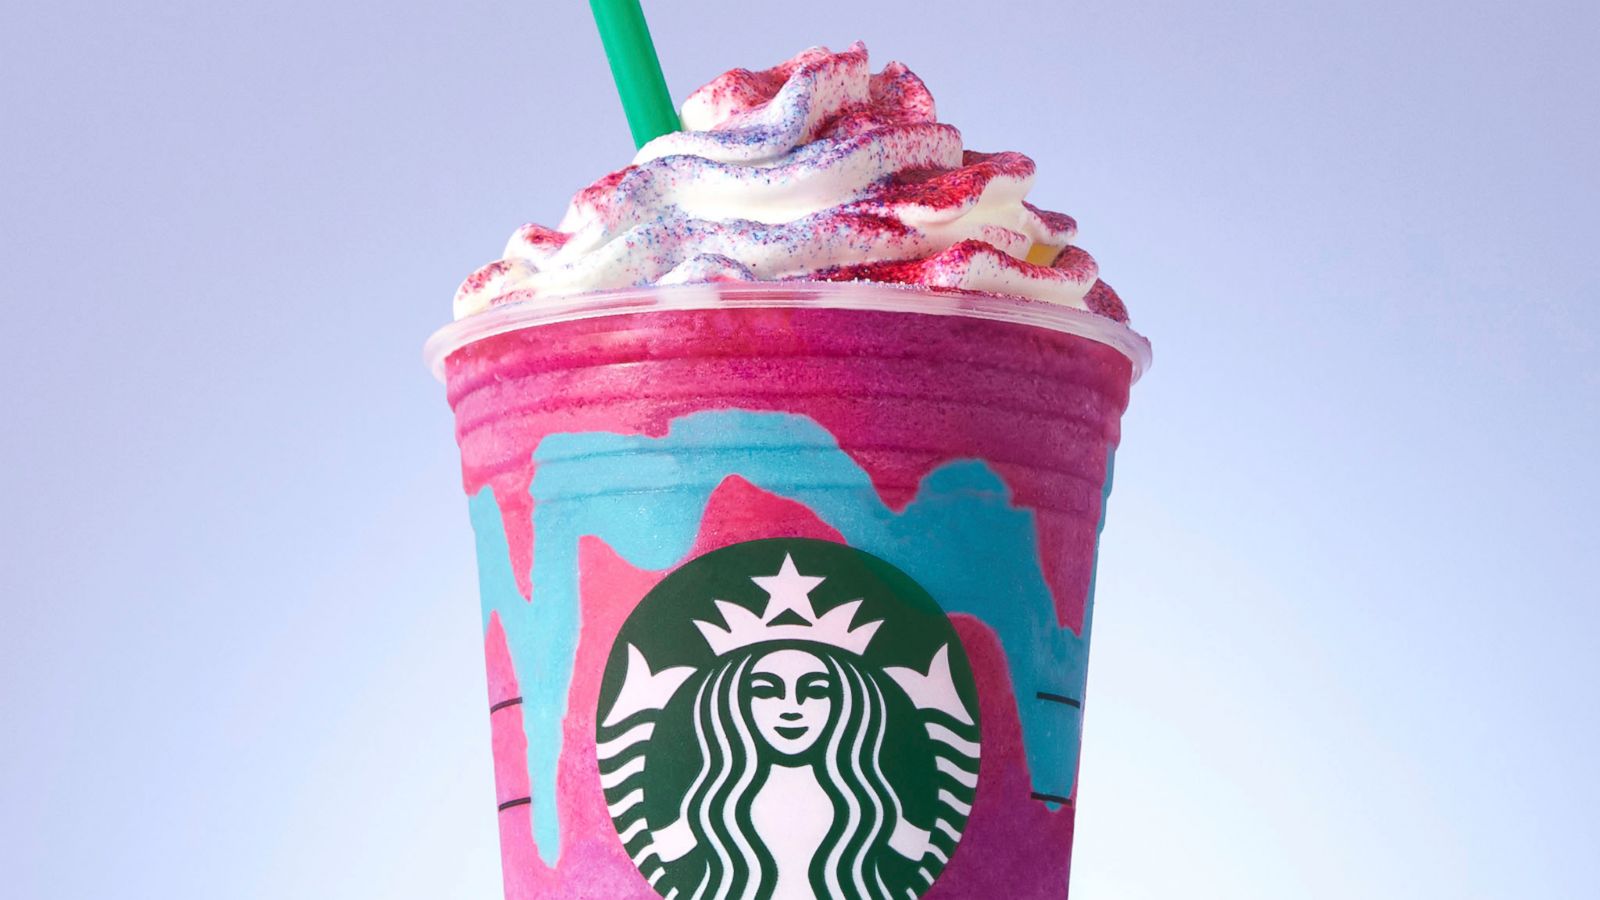 Brooklyn cafe sues Starbucks over 'unicorn' drink